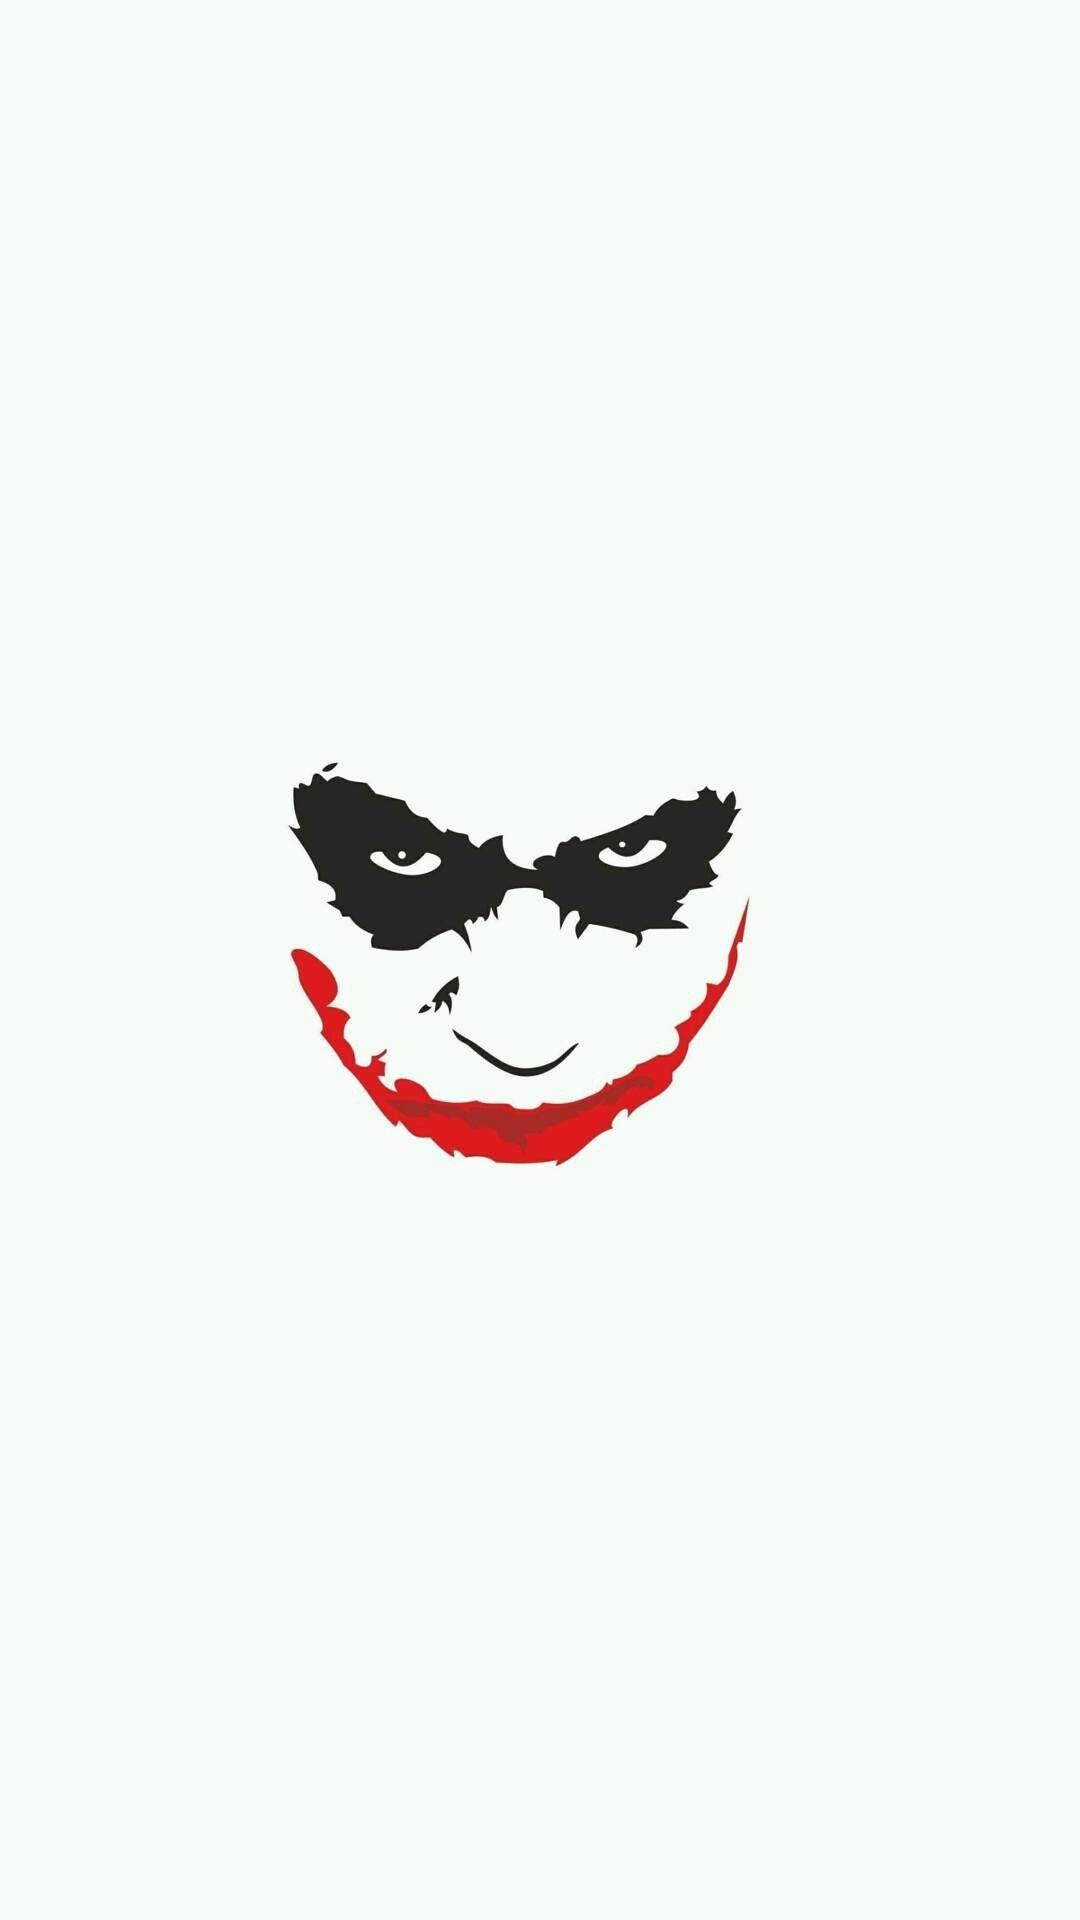 Joker Cute Wallpapers - Top Free Joker ...